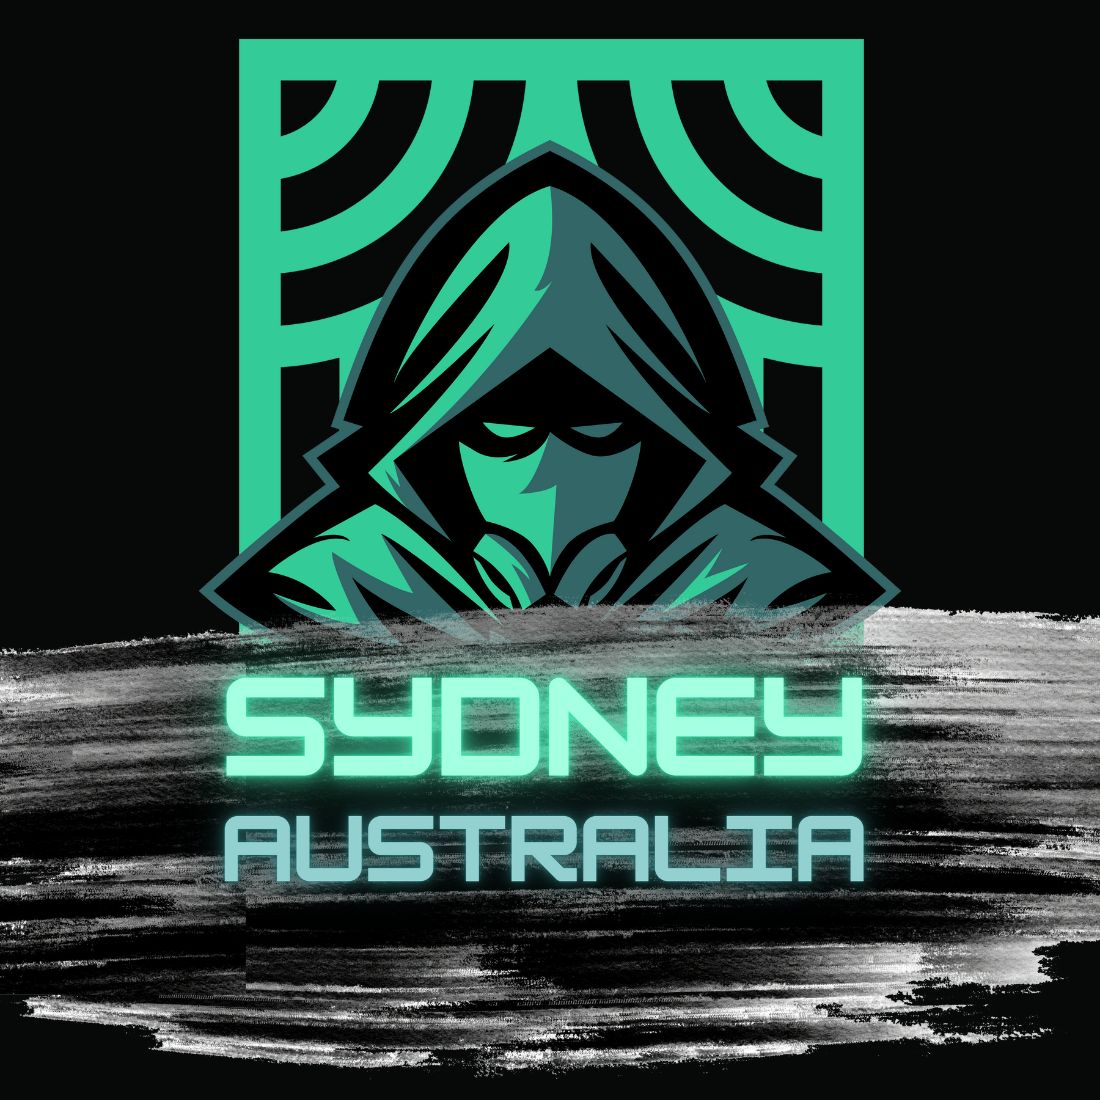 Sydney Australia T-Shirt Design cover image.